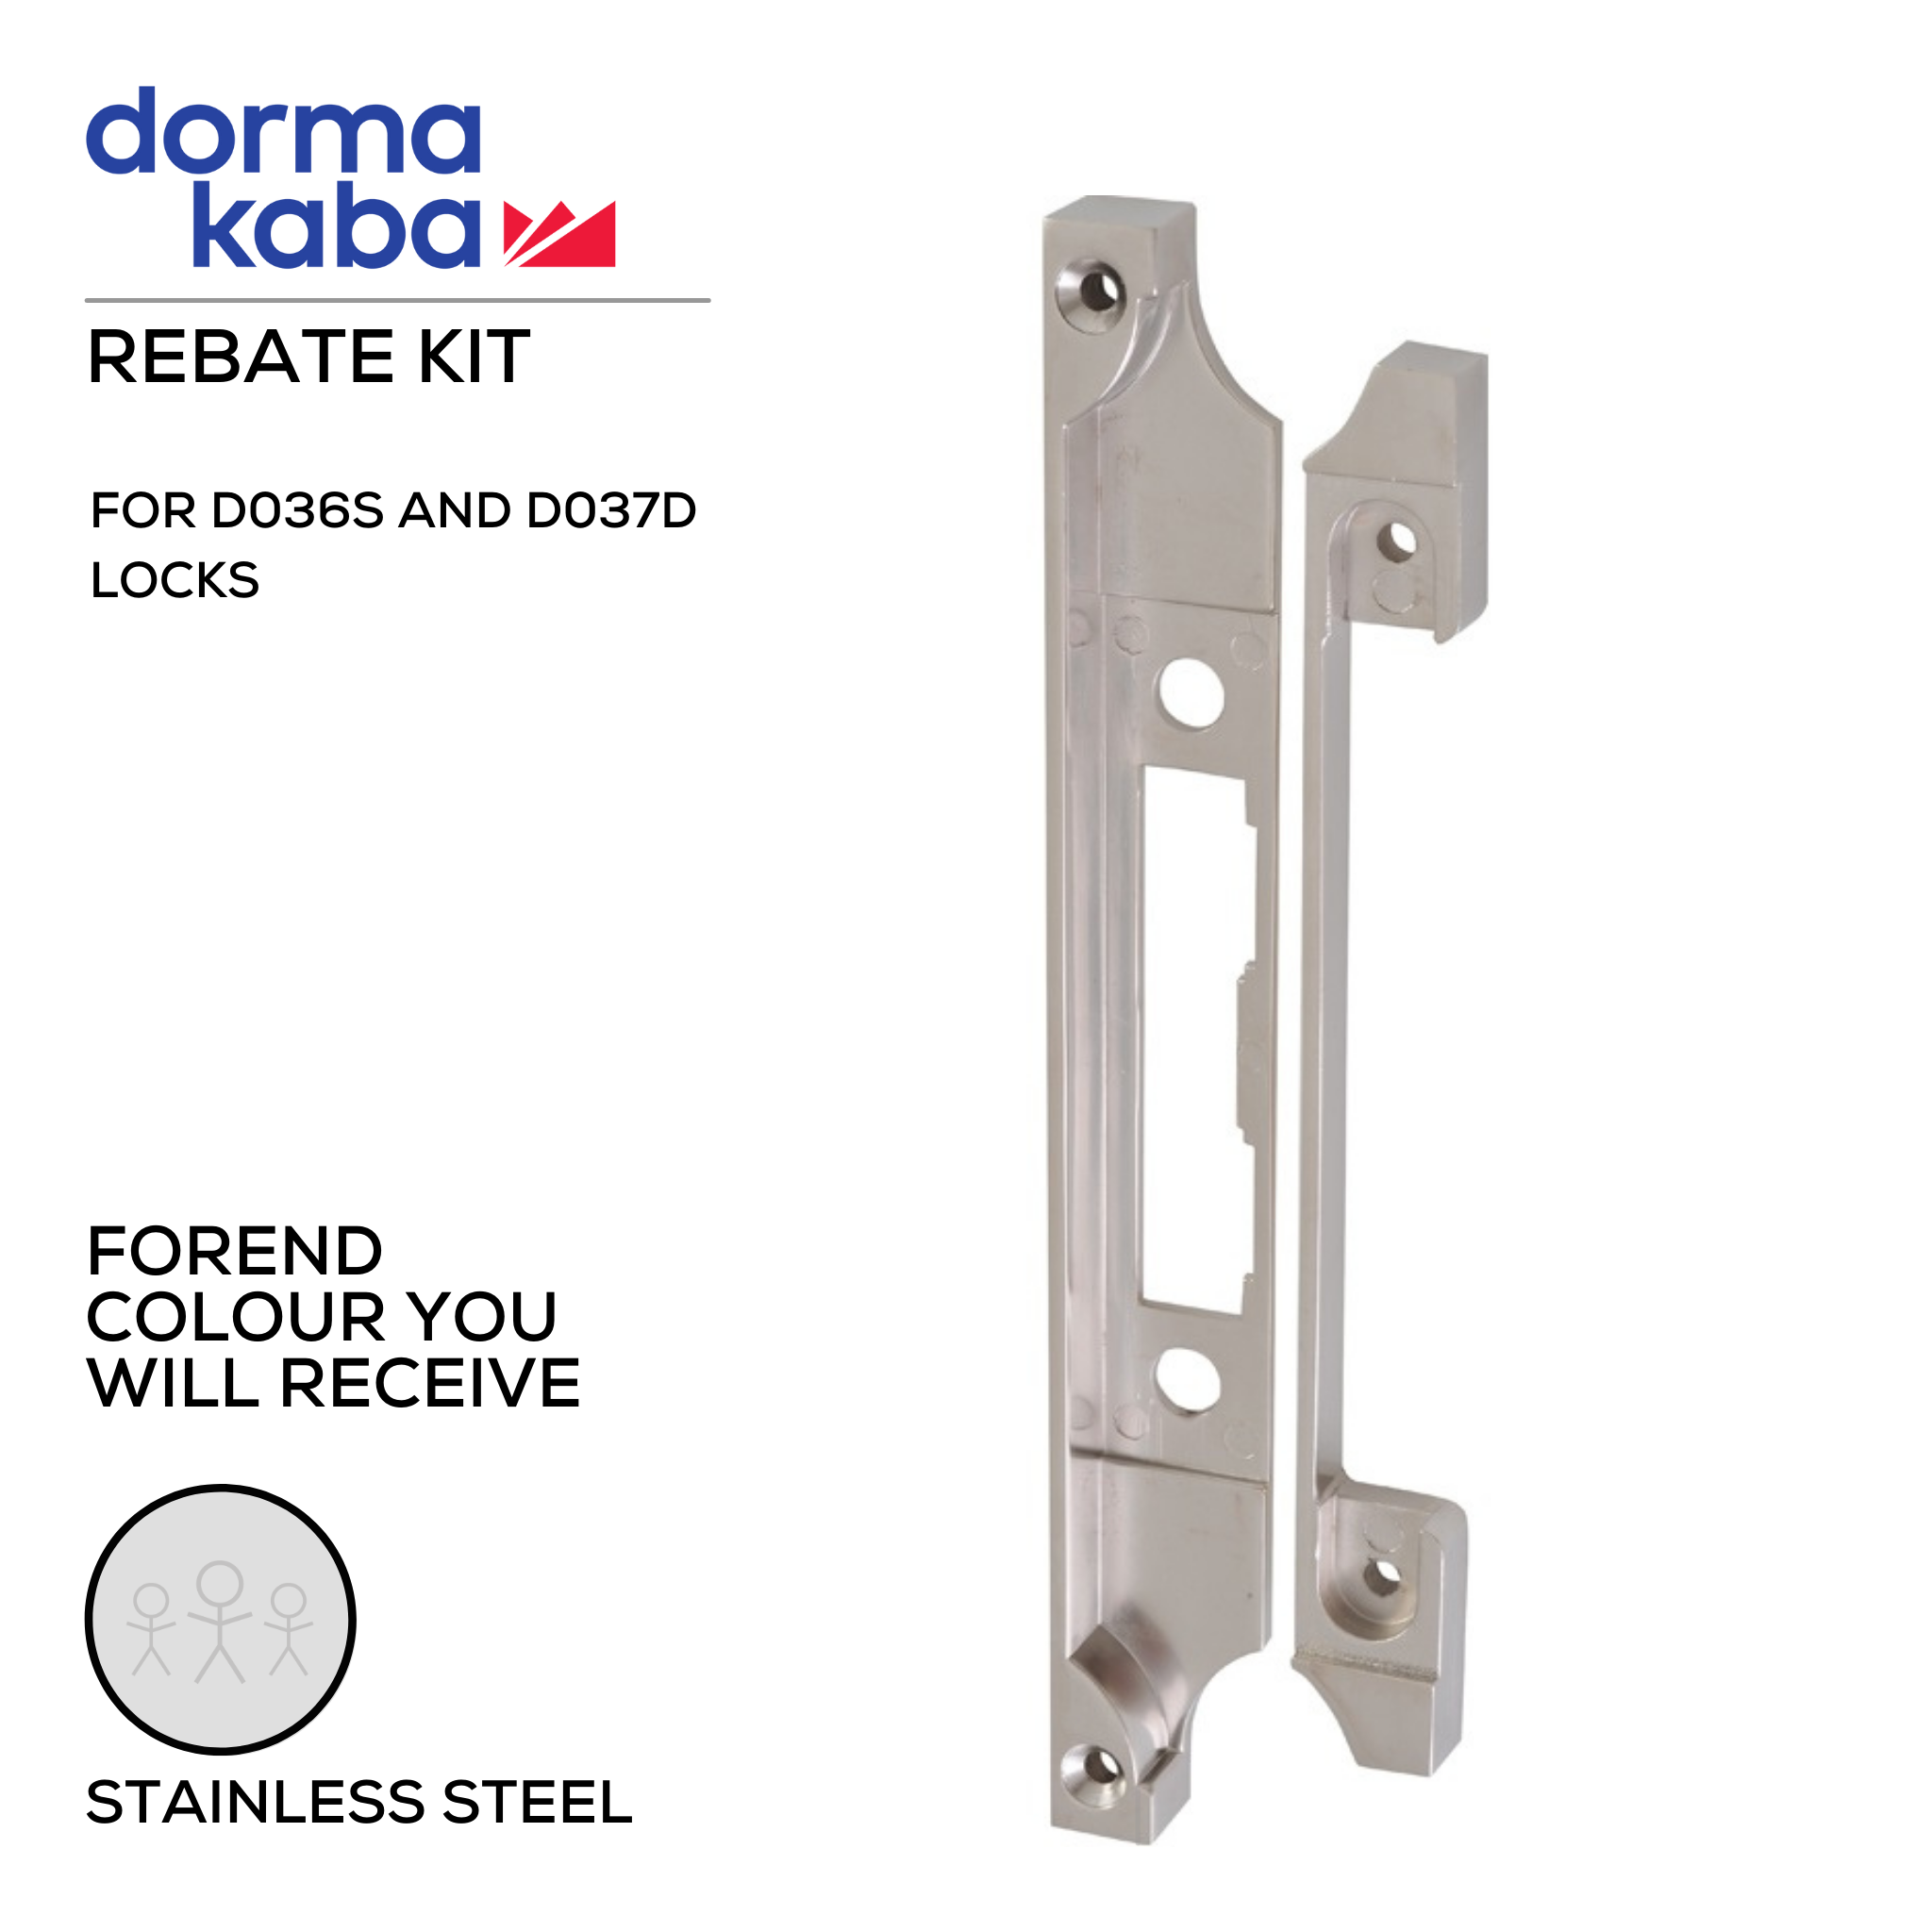 D038R, Rebate Kit, for D036S and D037D Locks, Stainless Steel, DORMAKABA